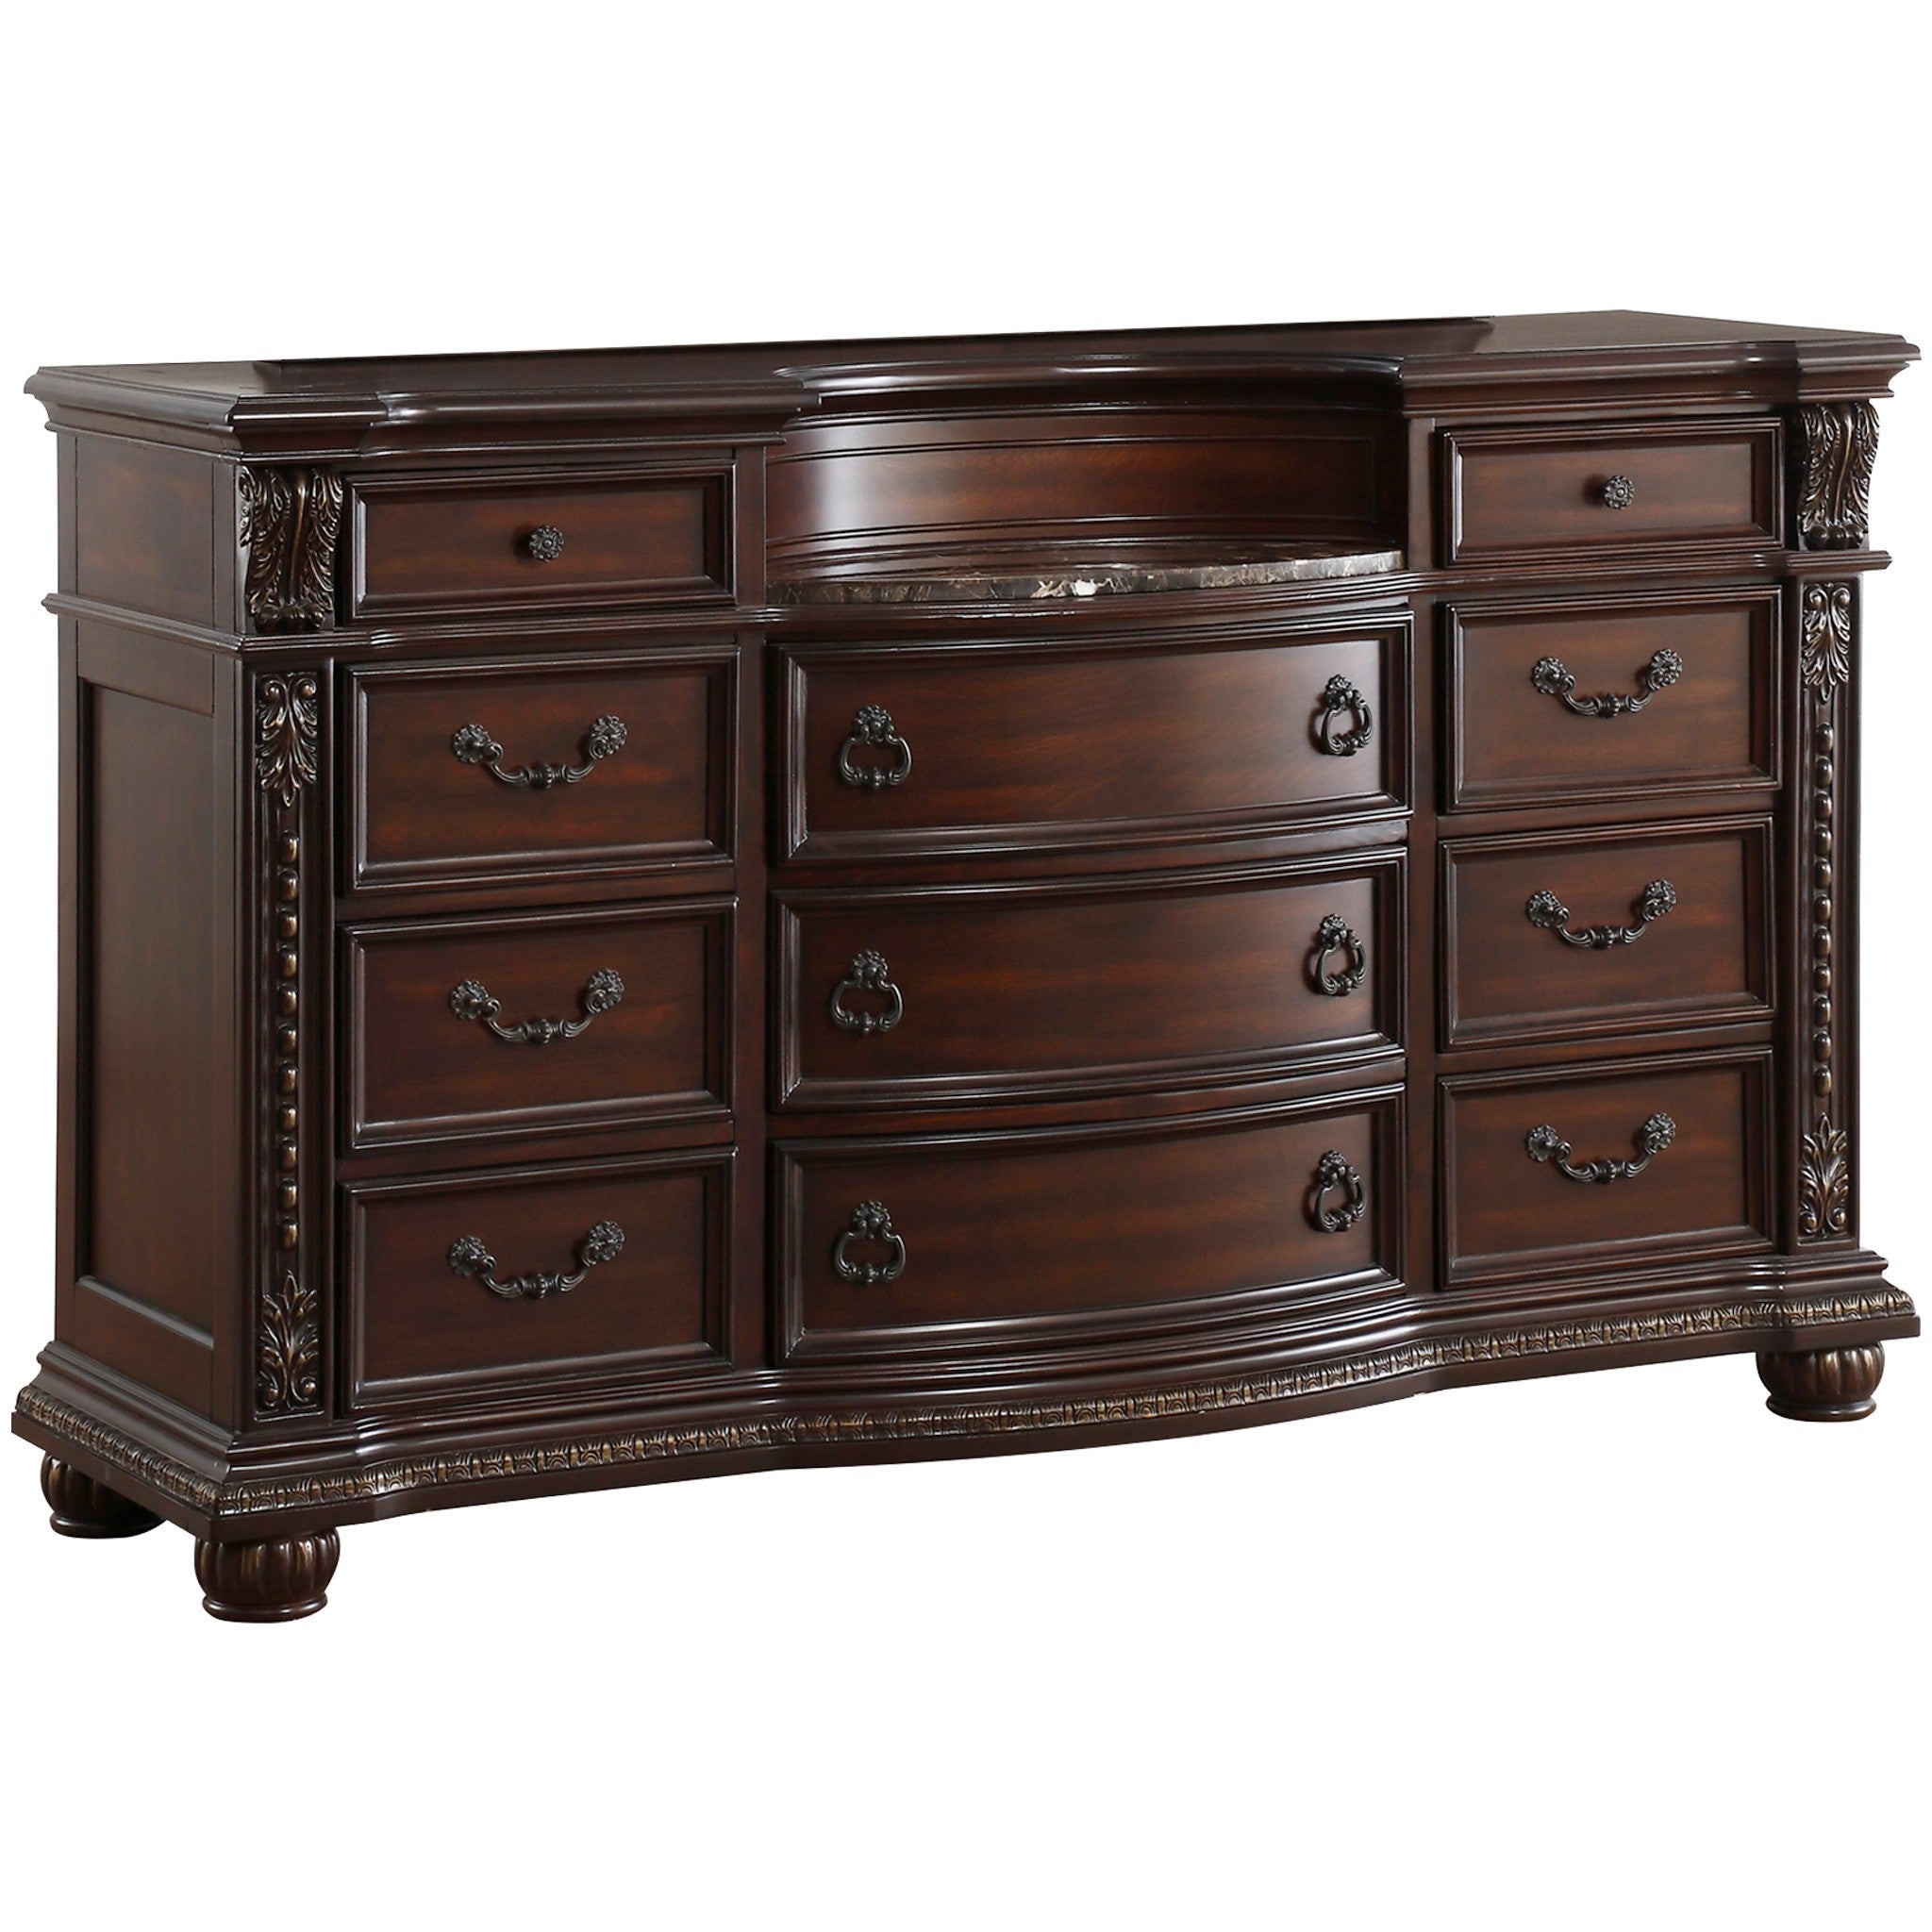 Cavalier Dresser in Brown